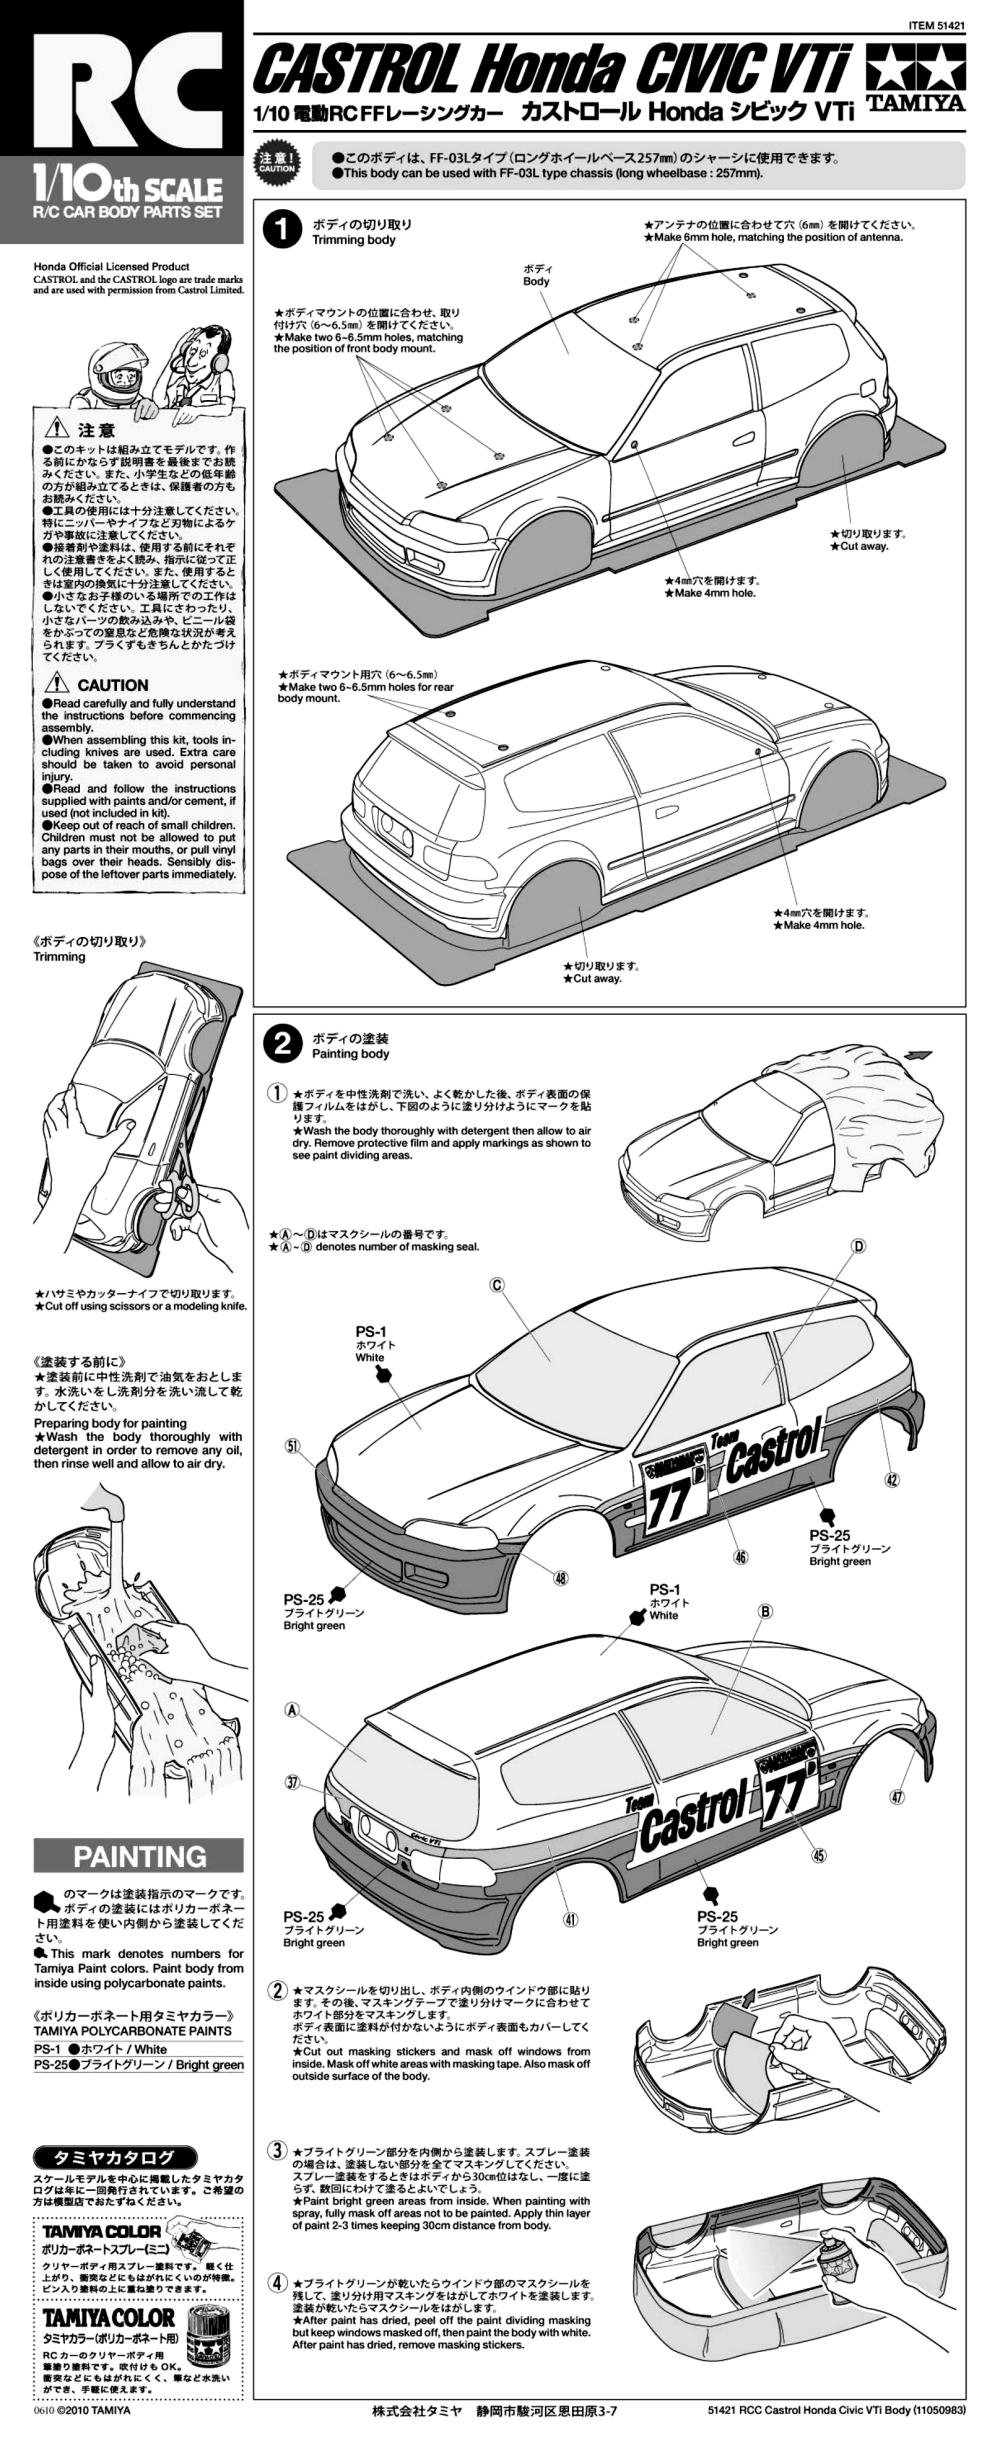 Tamiya - Castrol Honda Civic VTi - Body - Manual - Page 1